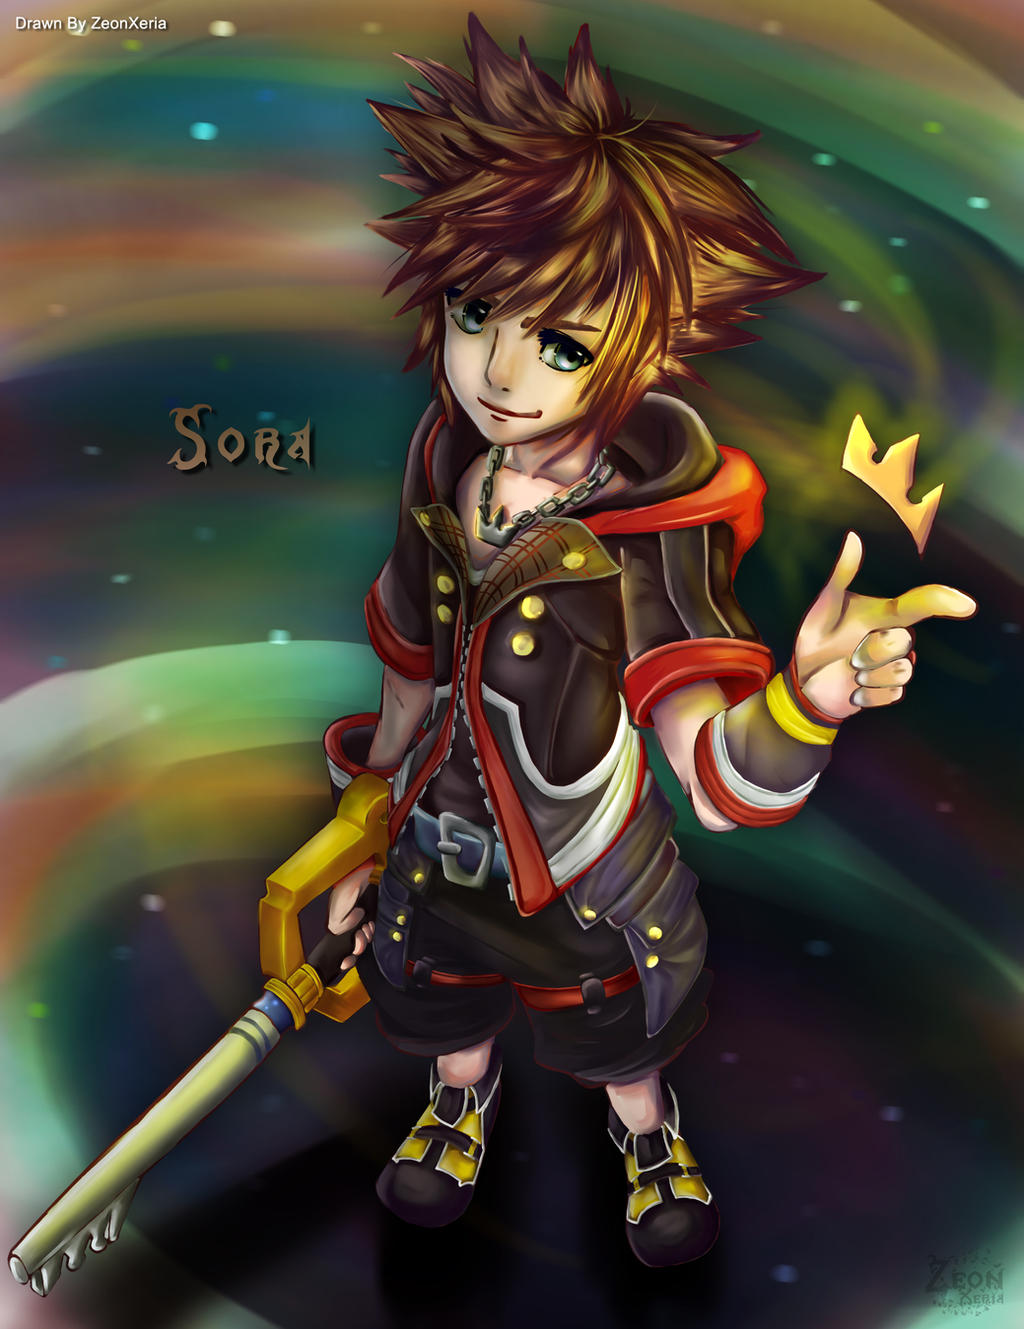 Sora - Kingdom Hearts III by ZeonXeria on DeviantArt